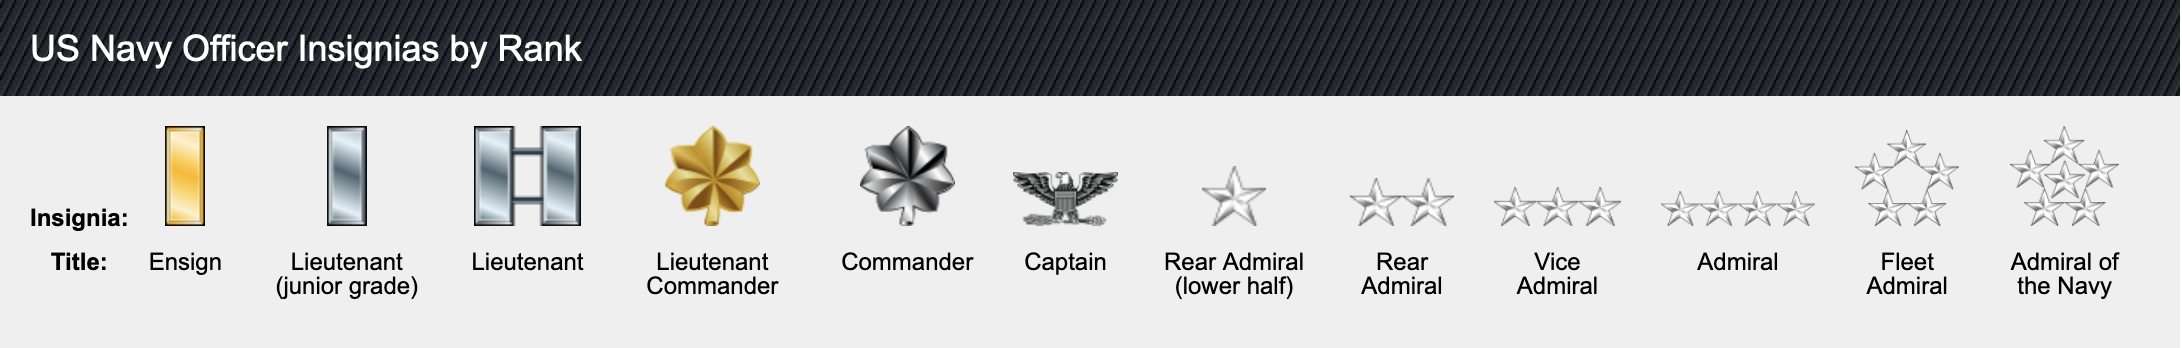 navy officer ranks